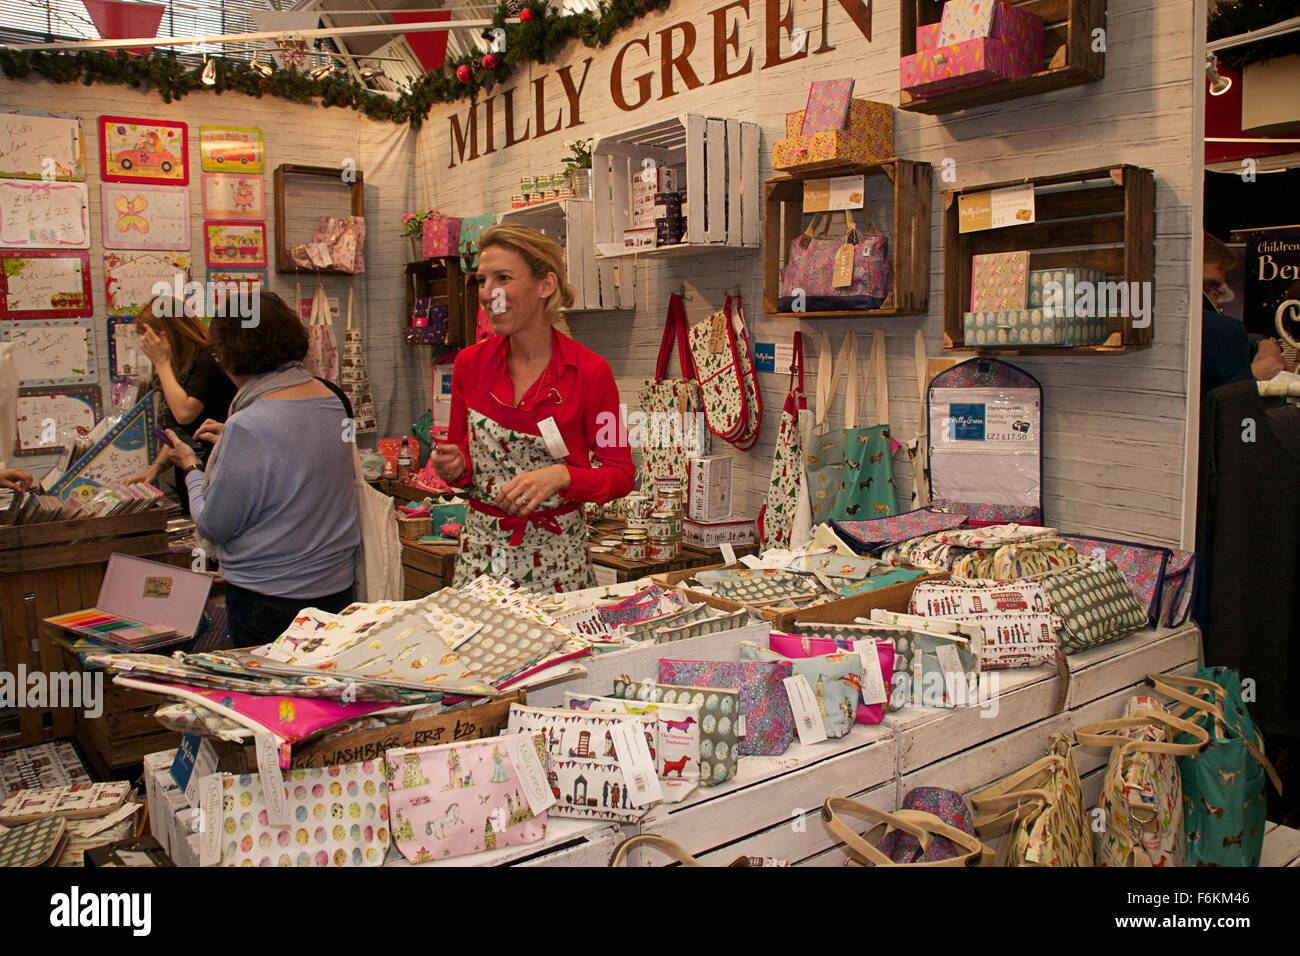 Landleben, Weihnachtsmarkt, Business Design Centre, Islington, London, 2015 - Milly grün Stockfoto